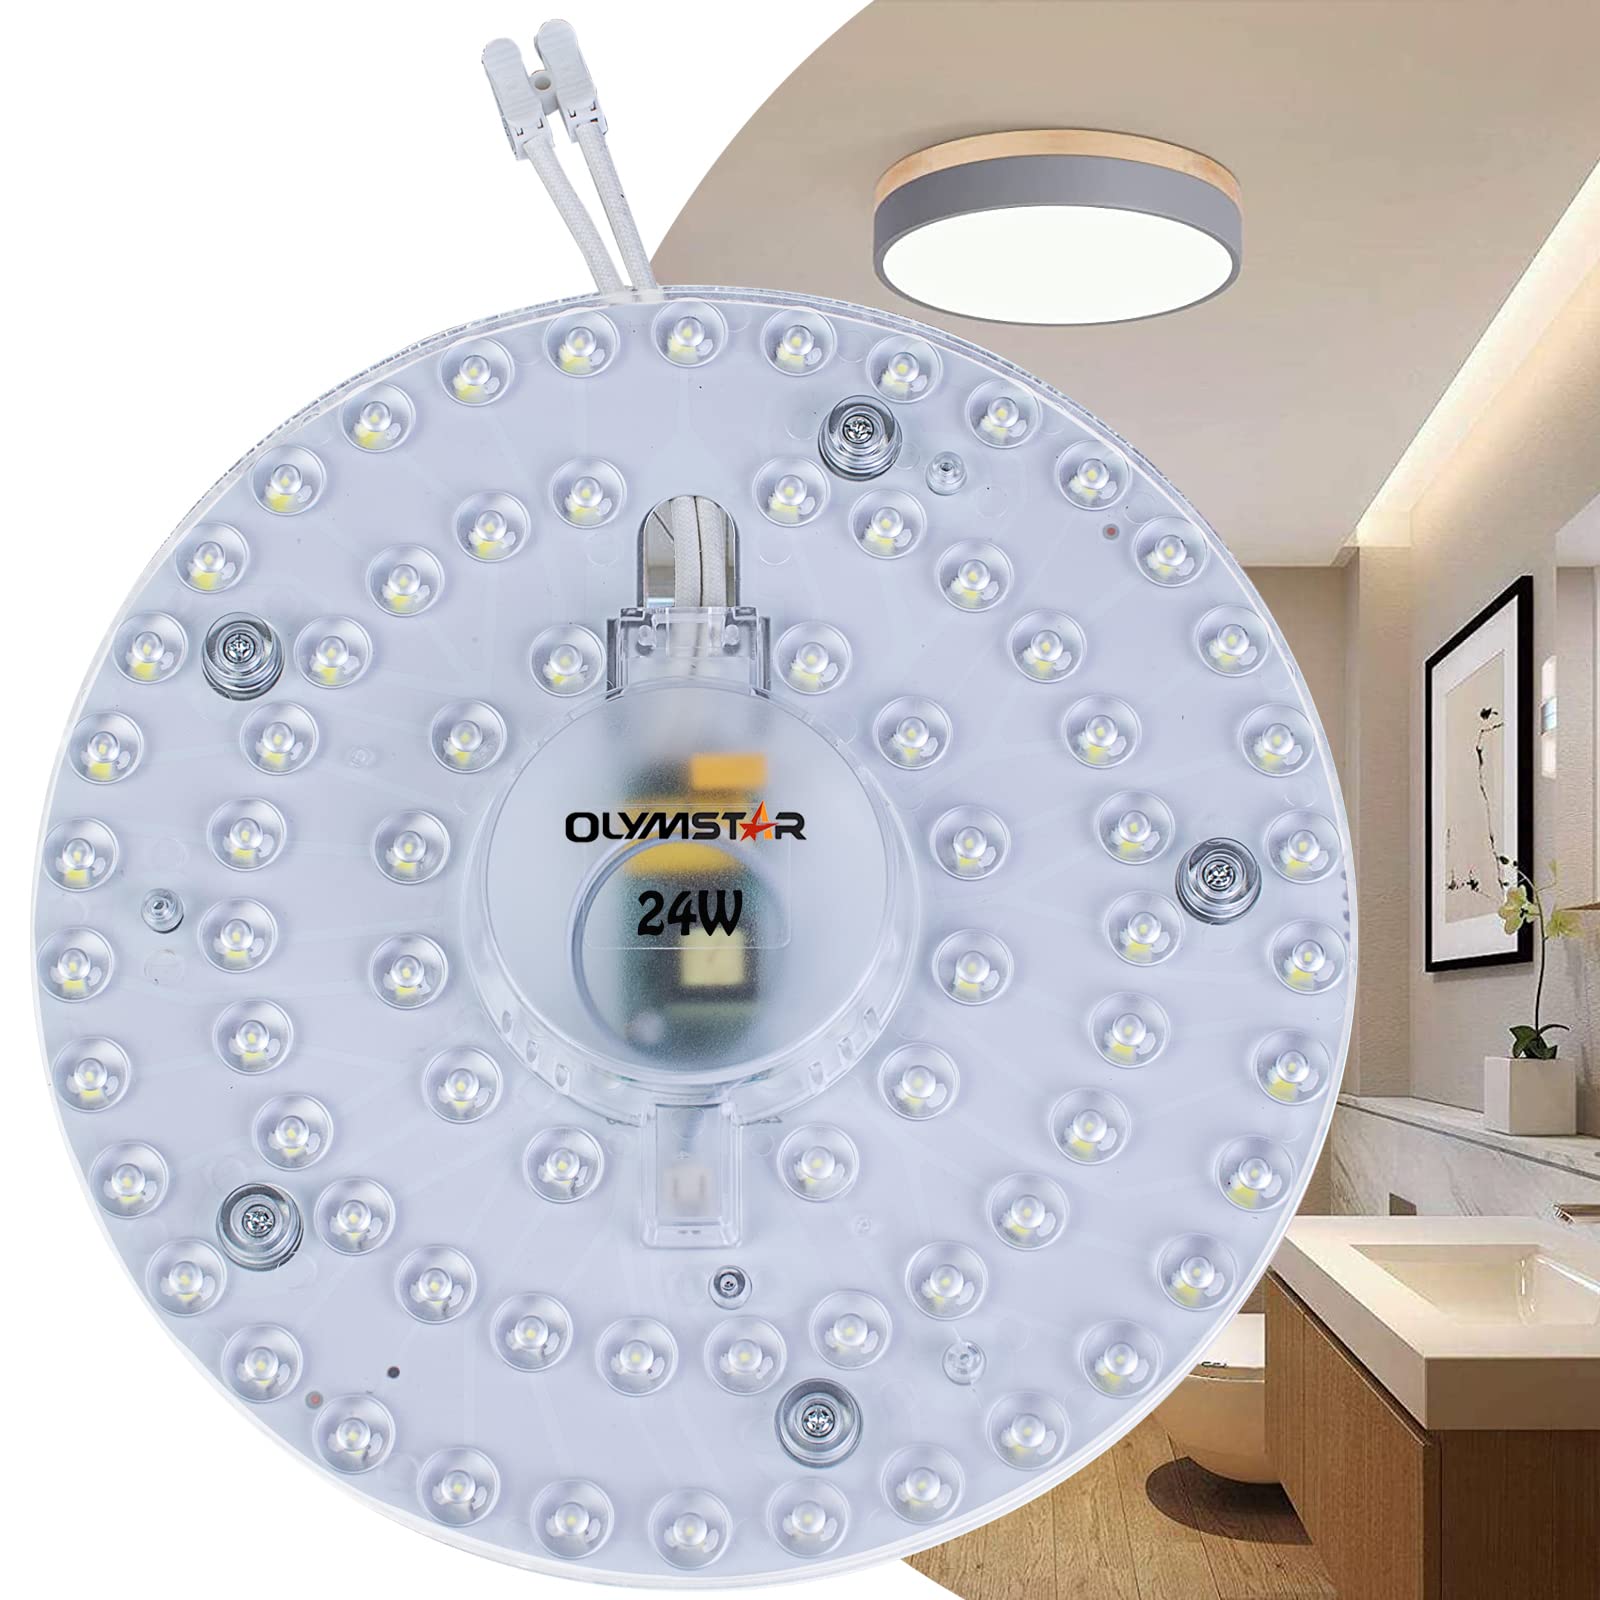 OLYMSTAR 24W LED ceiling Fan Light Kit Light Board Panel for Flush Mount ceiling Light ceiling Fan Lights,Retrofit LED Light Engine 6000K